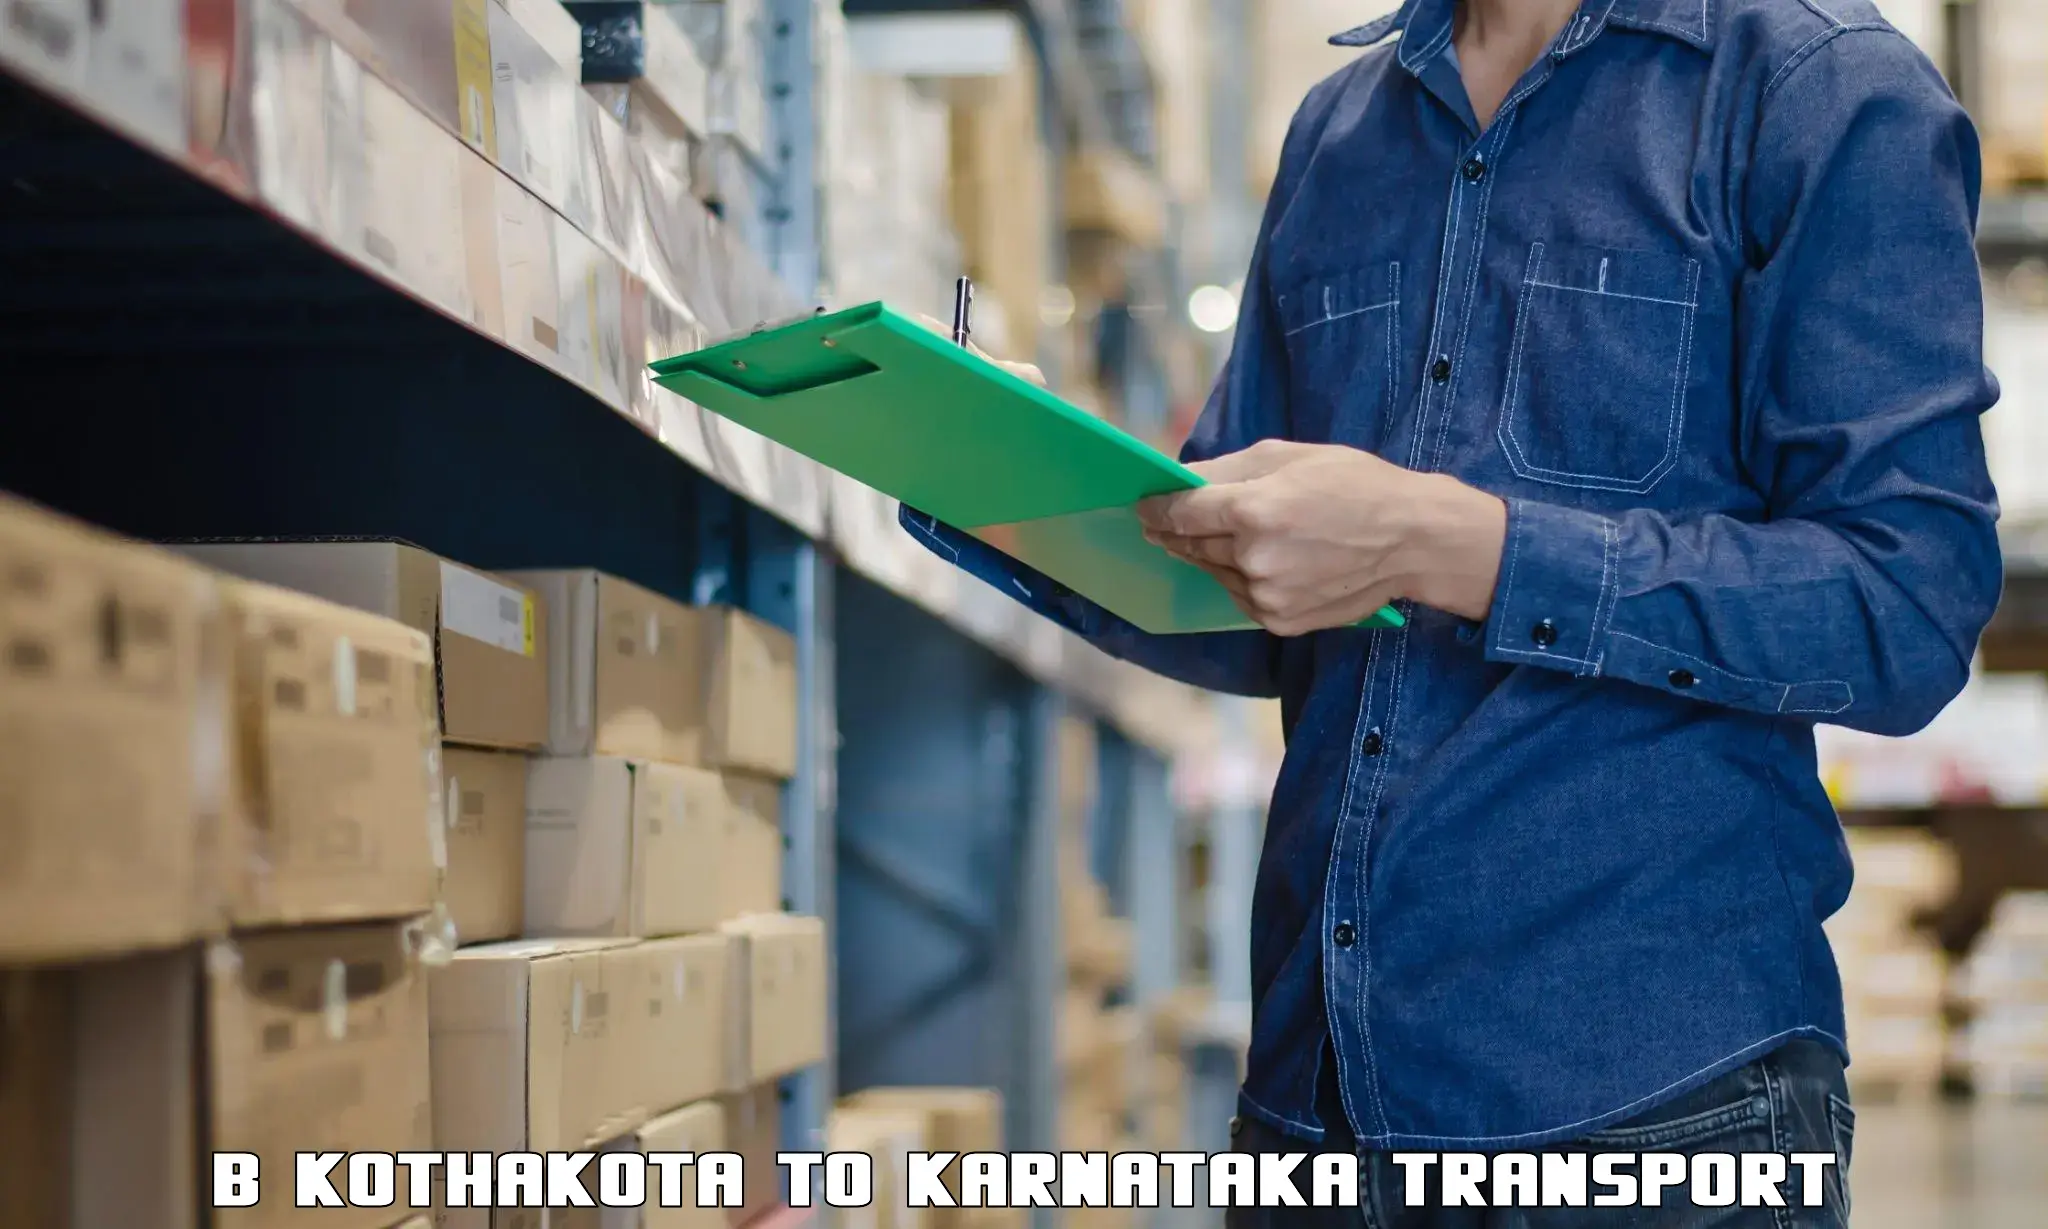 Two wheeler parcel service B Kothakota to Surathkal